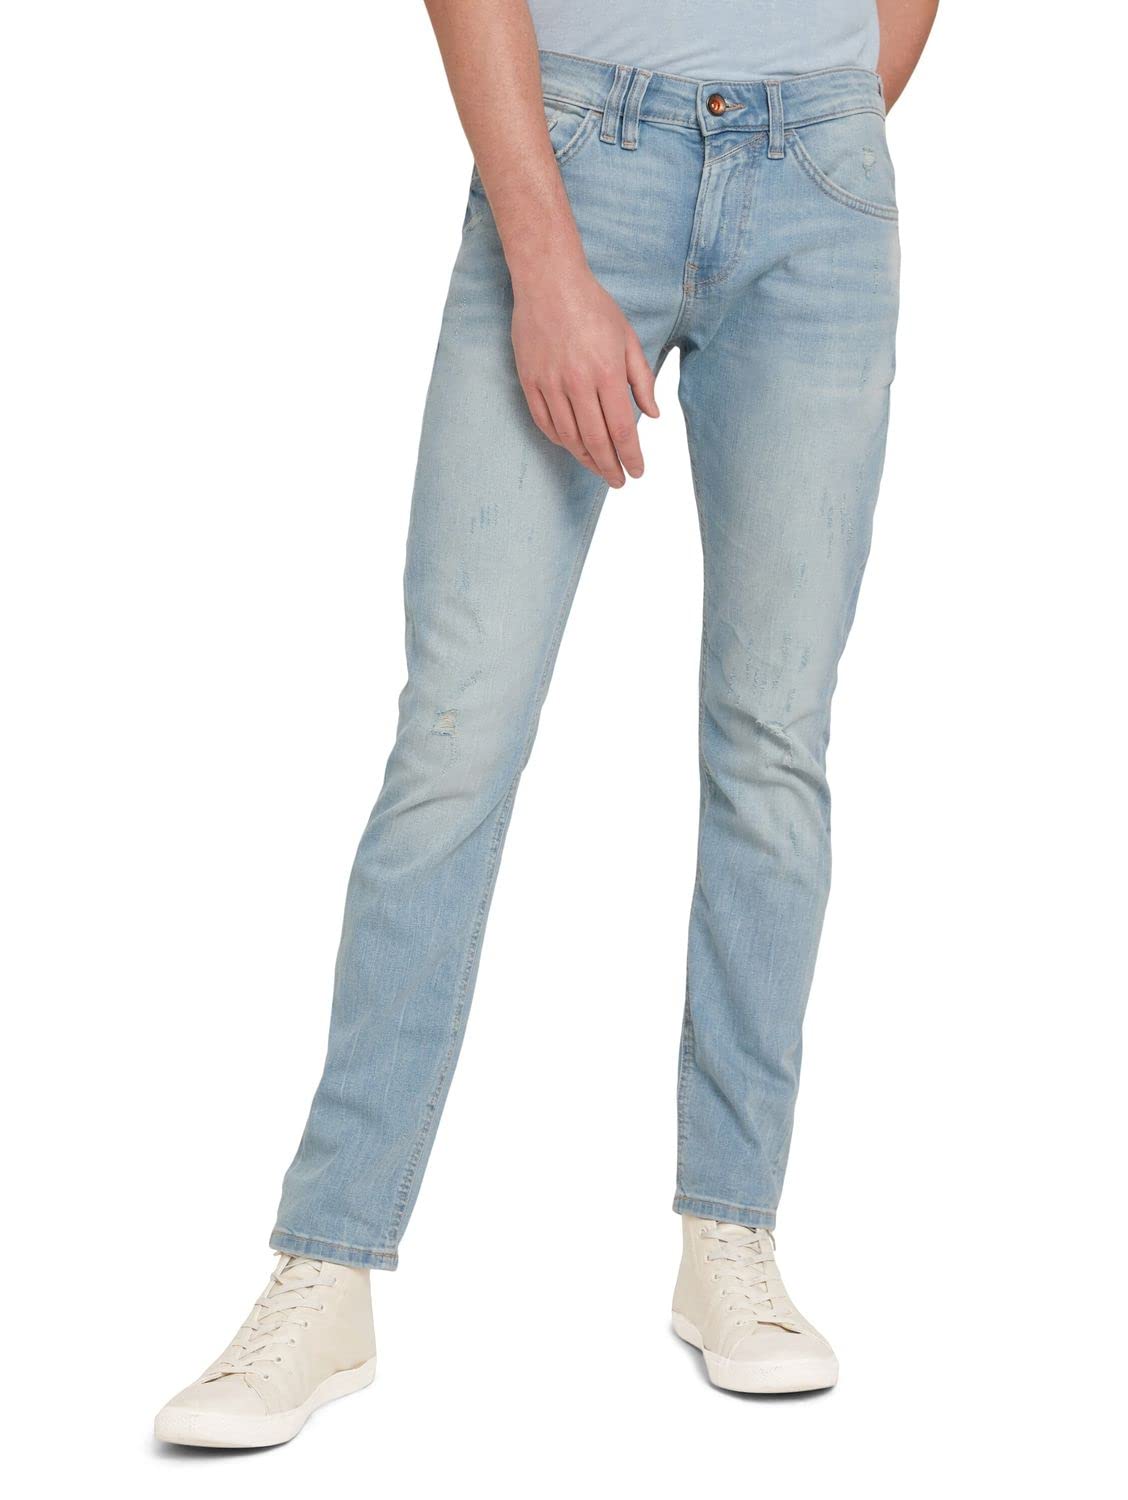 TOM TAILOR Denim Herren Piers Slim Jeans 1029730, 10117 - Used Bleached Blue Denim, 30W / 34L